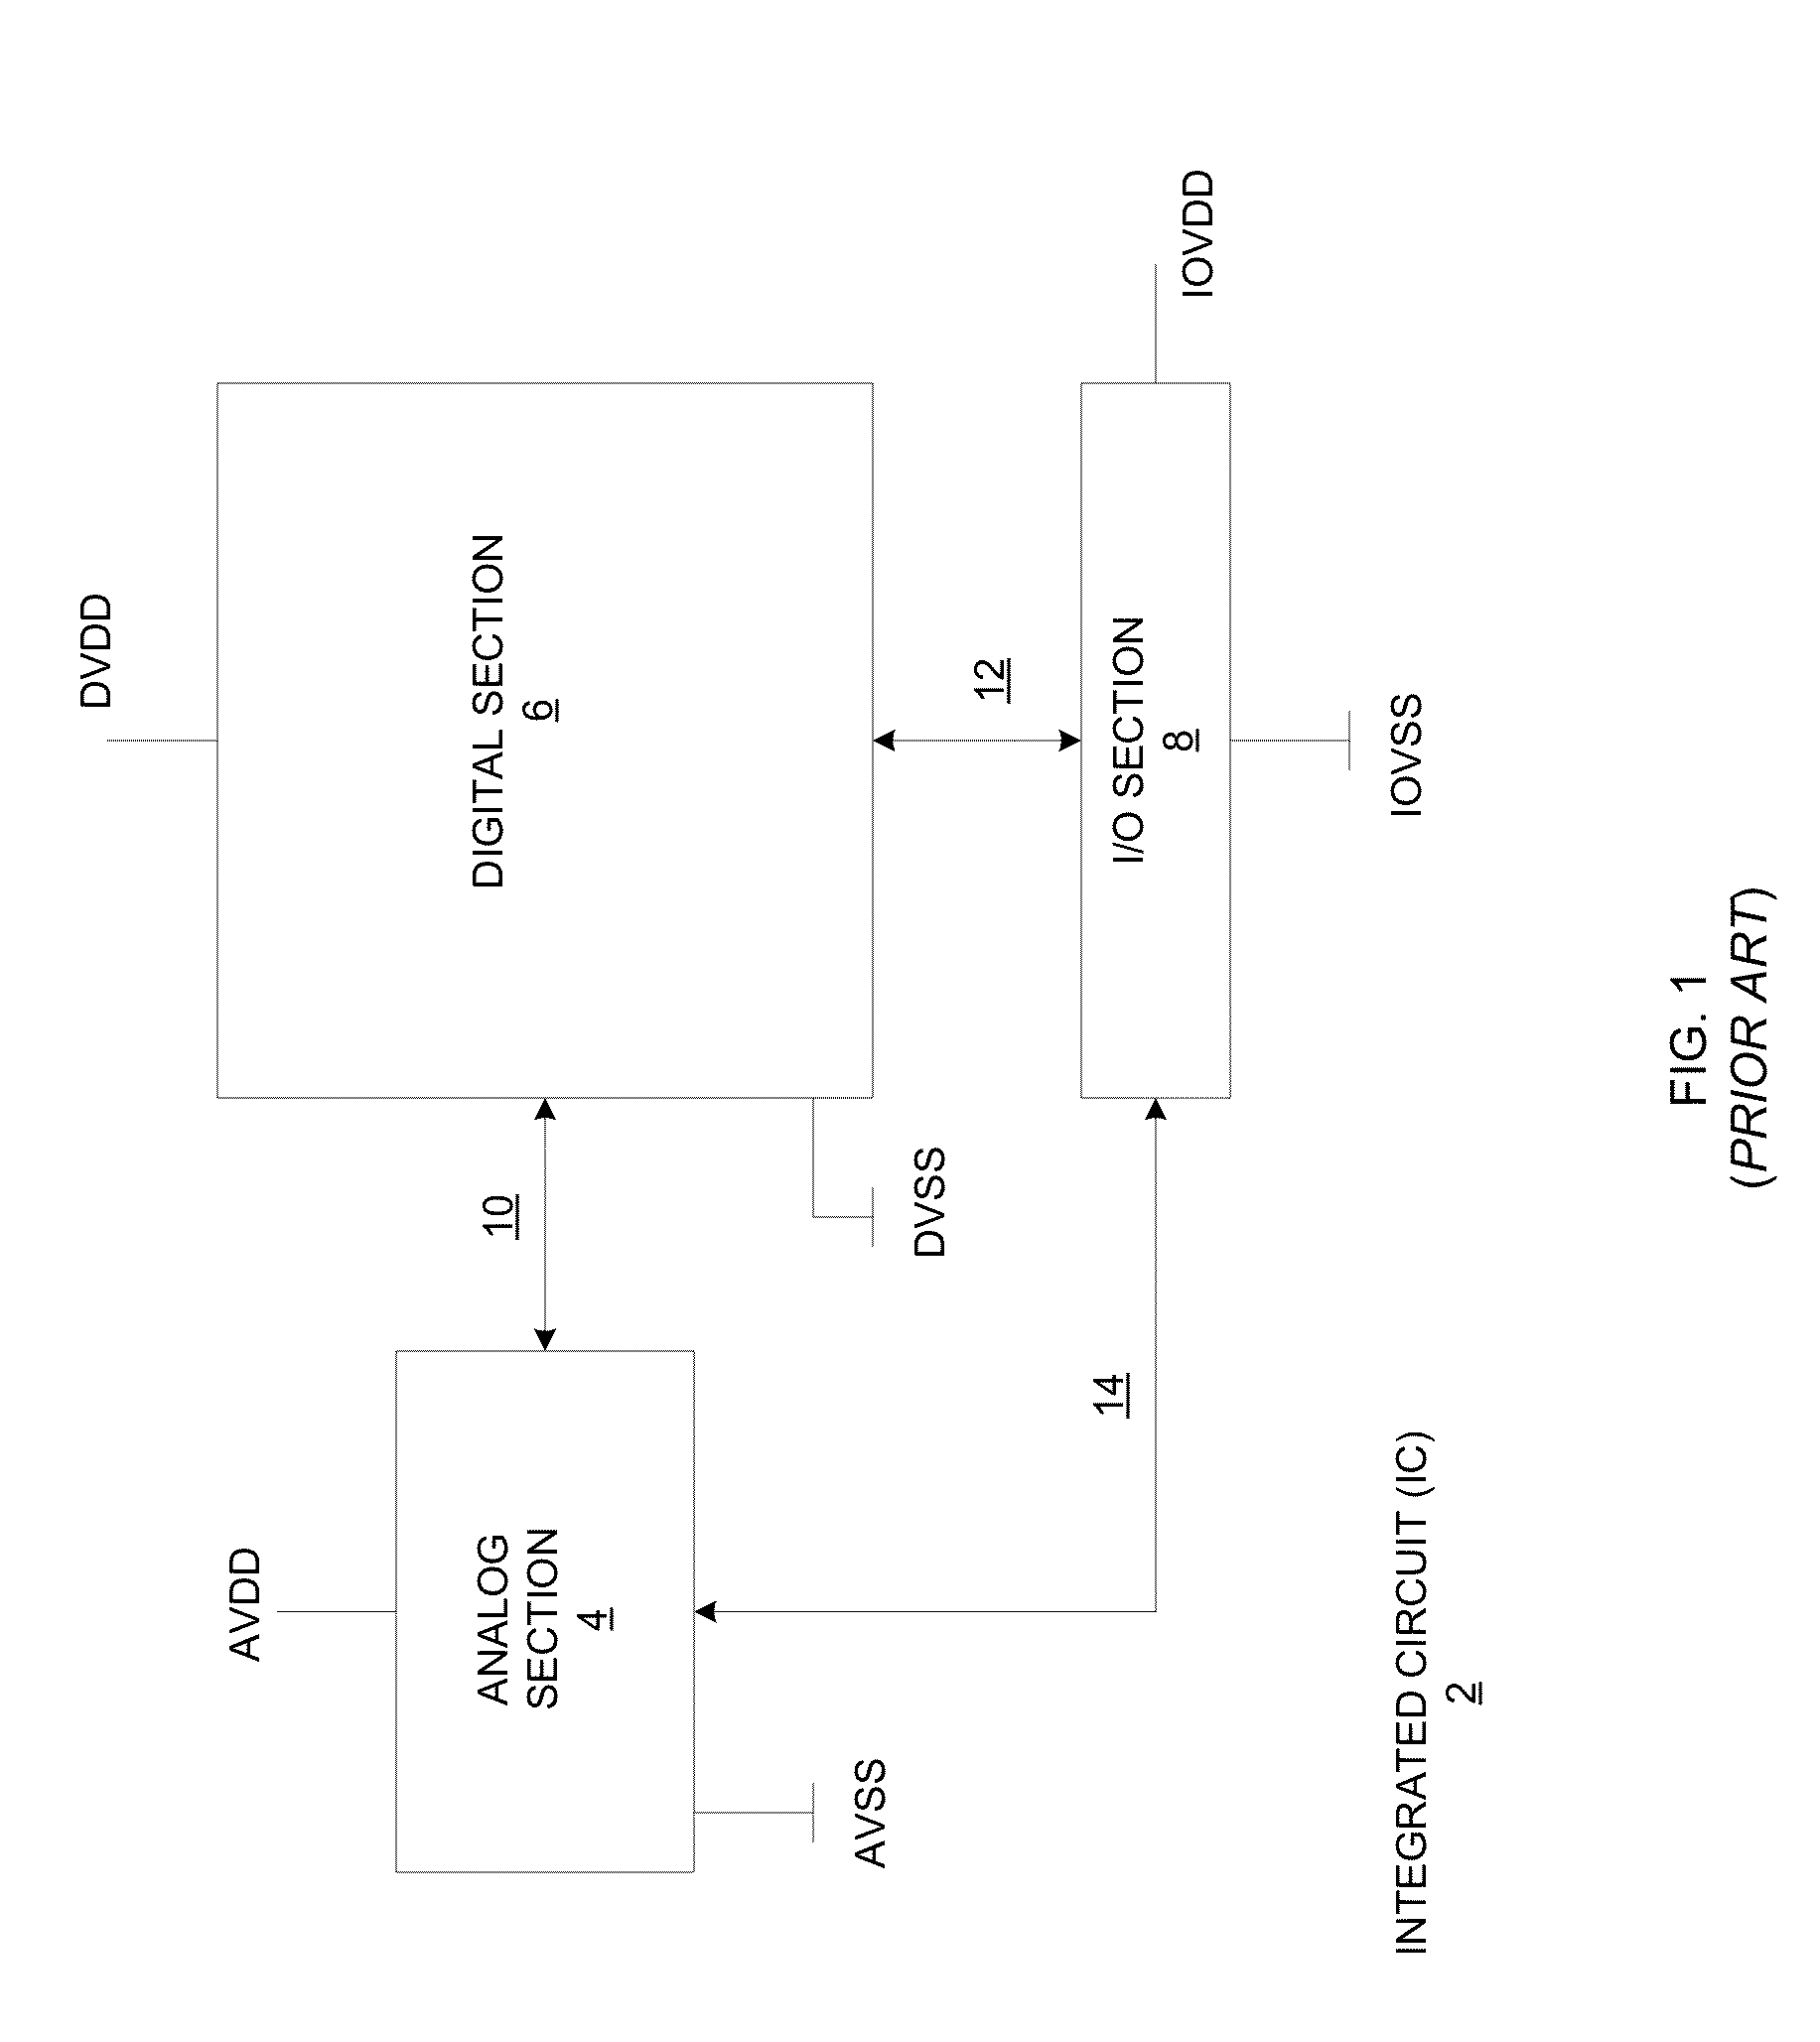 Apparatus for interfacing circuit domains